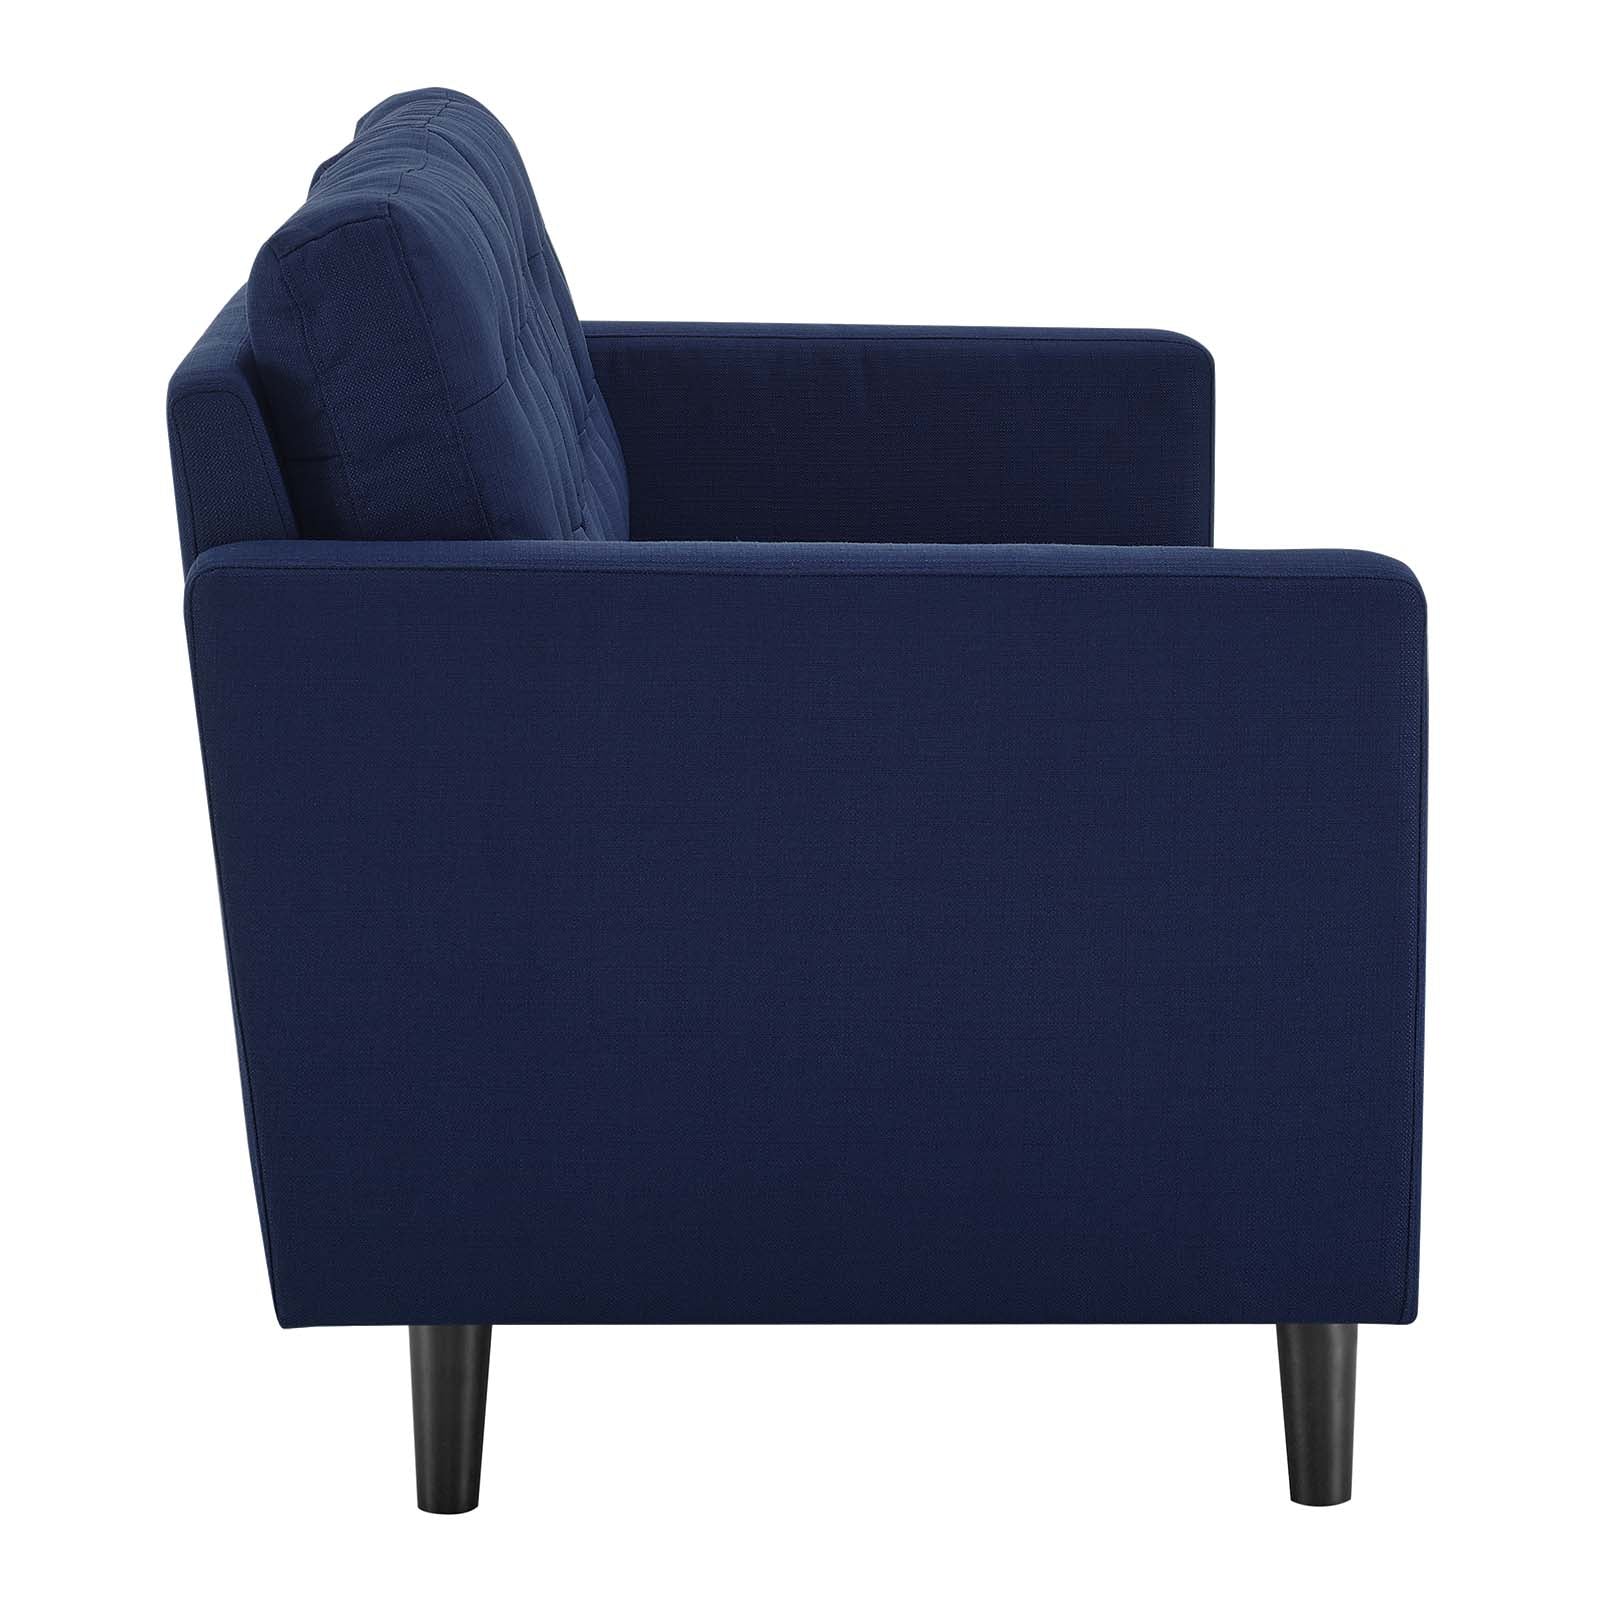 Modway Sofas & Couches - Exalt Tufted Fabric Sofa Royal Blue